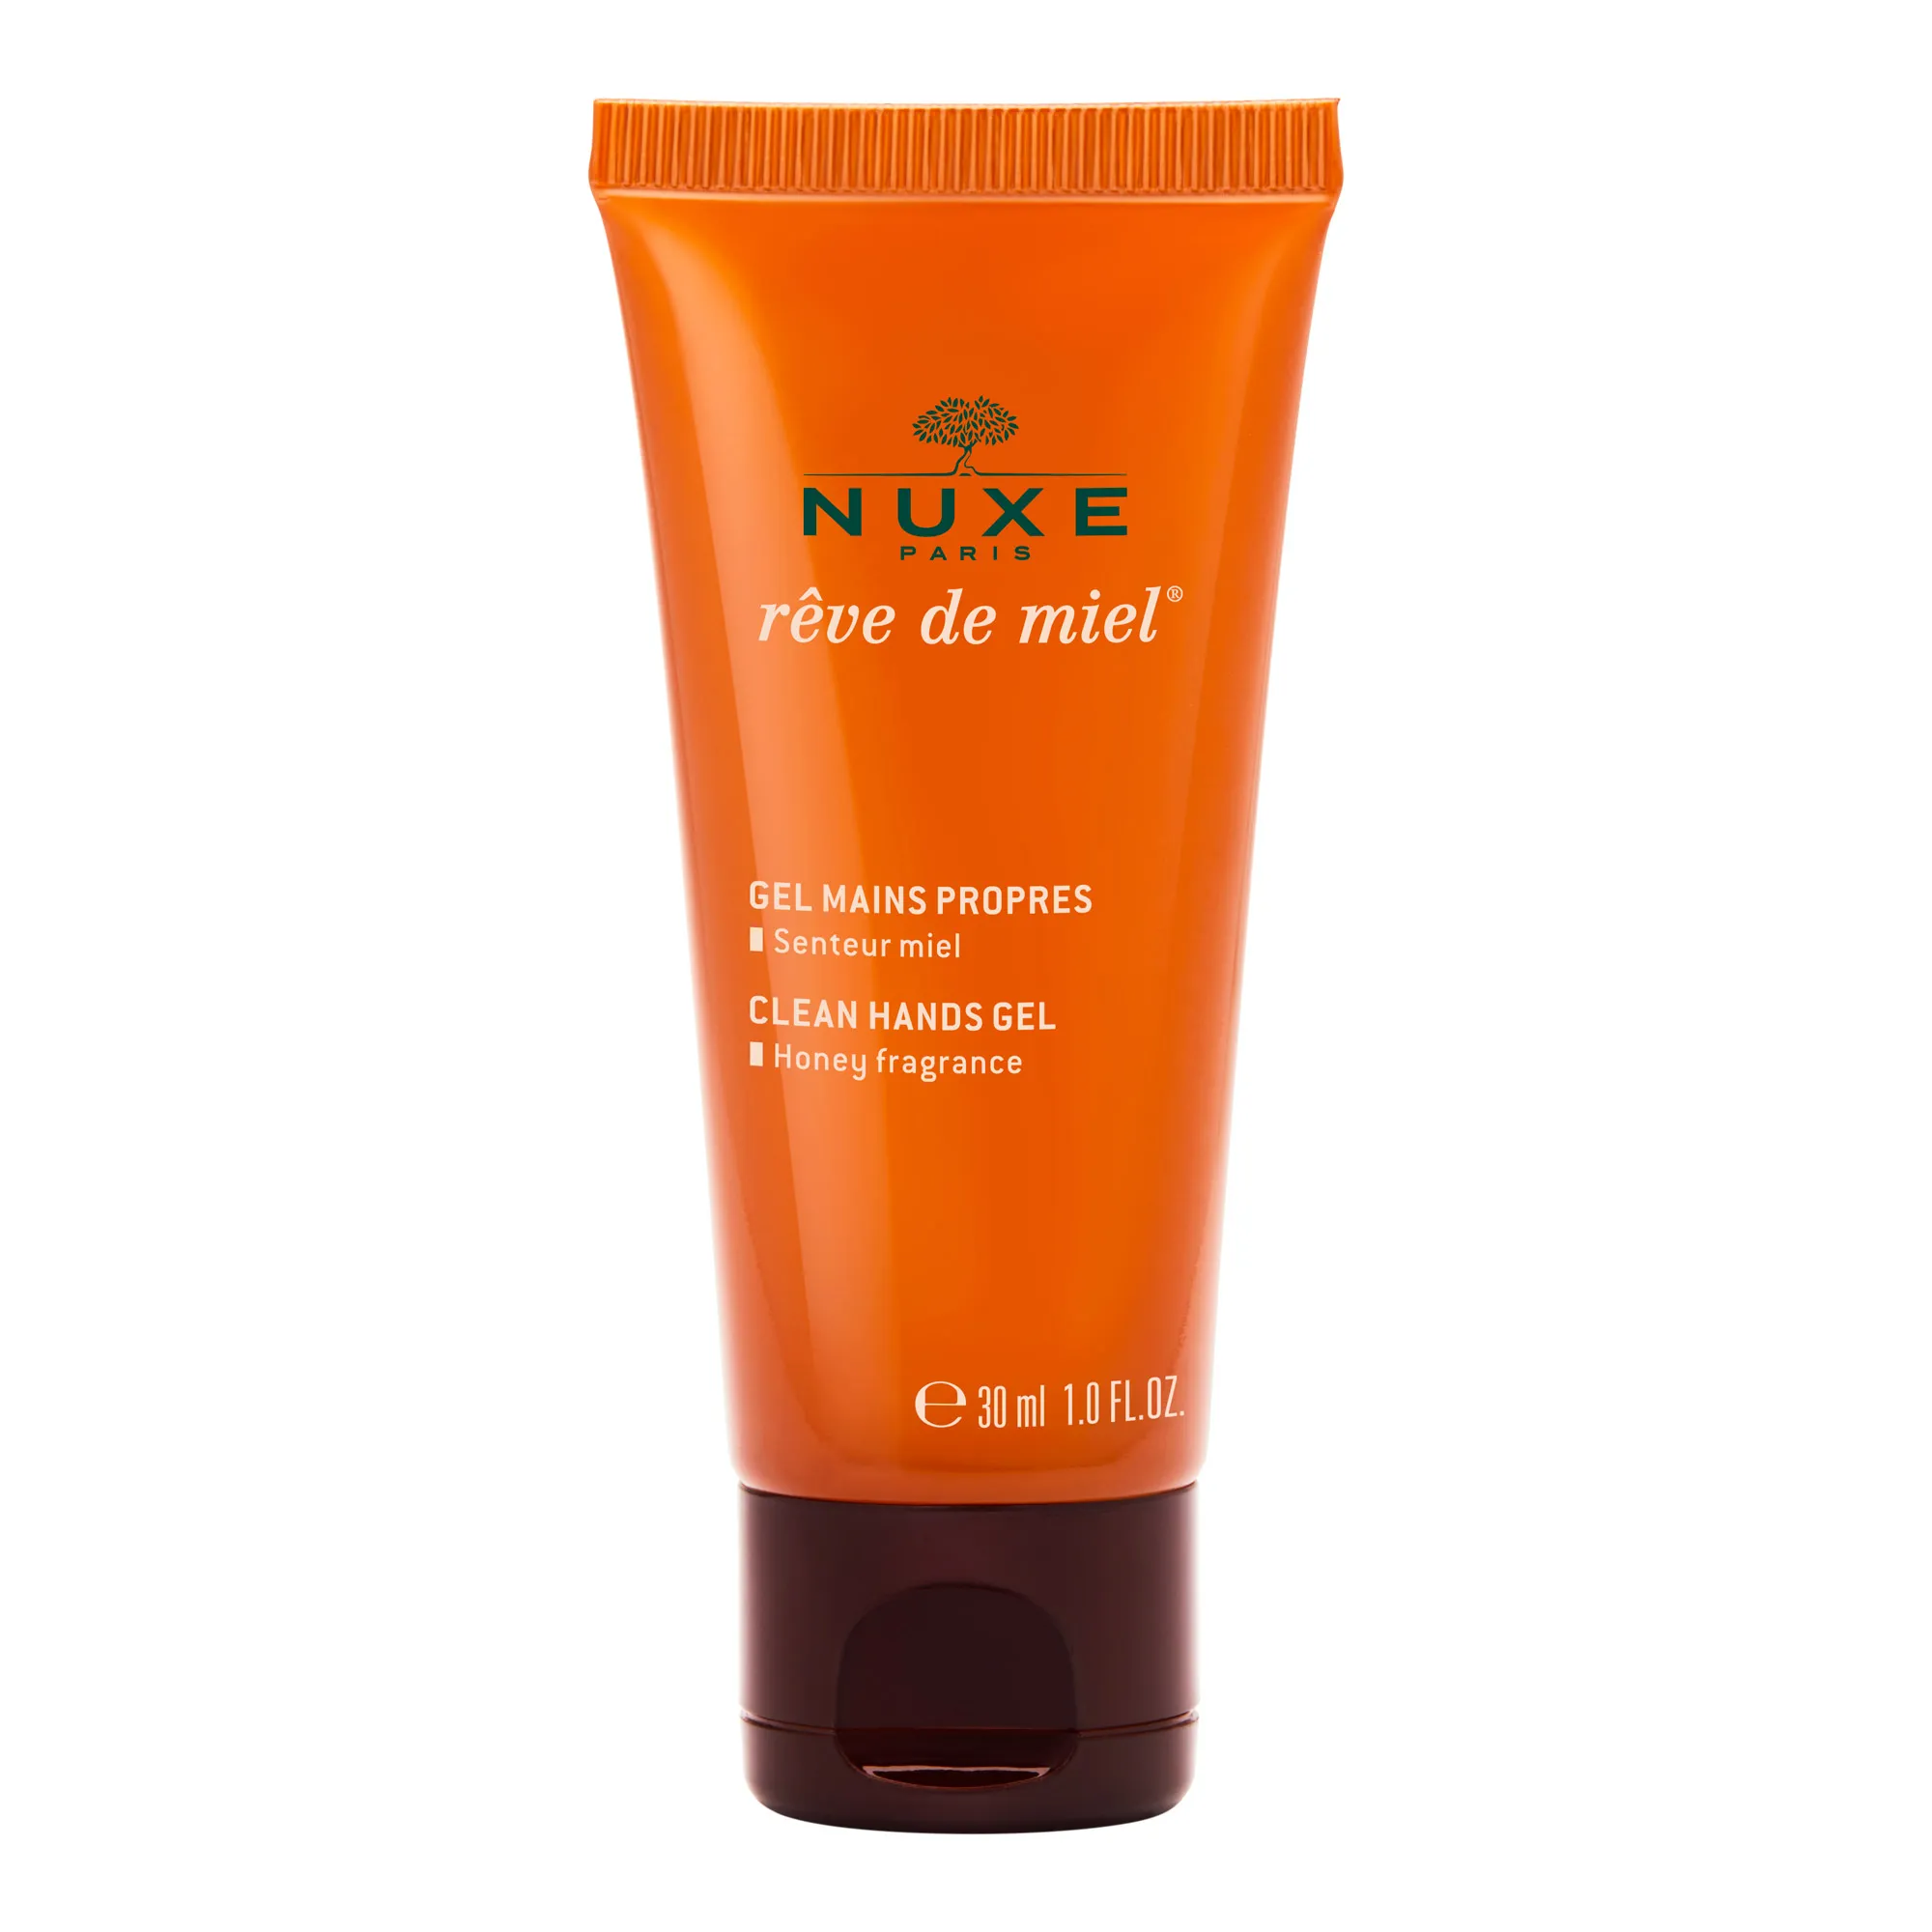 Nuxe Reve de Miel, żel czyste dłonie, 30 ml